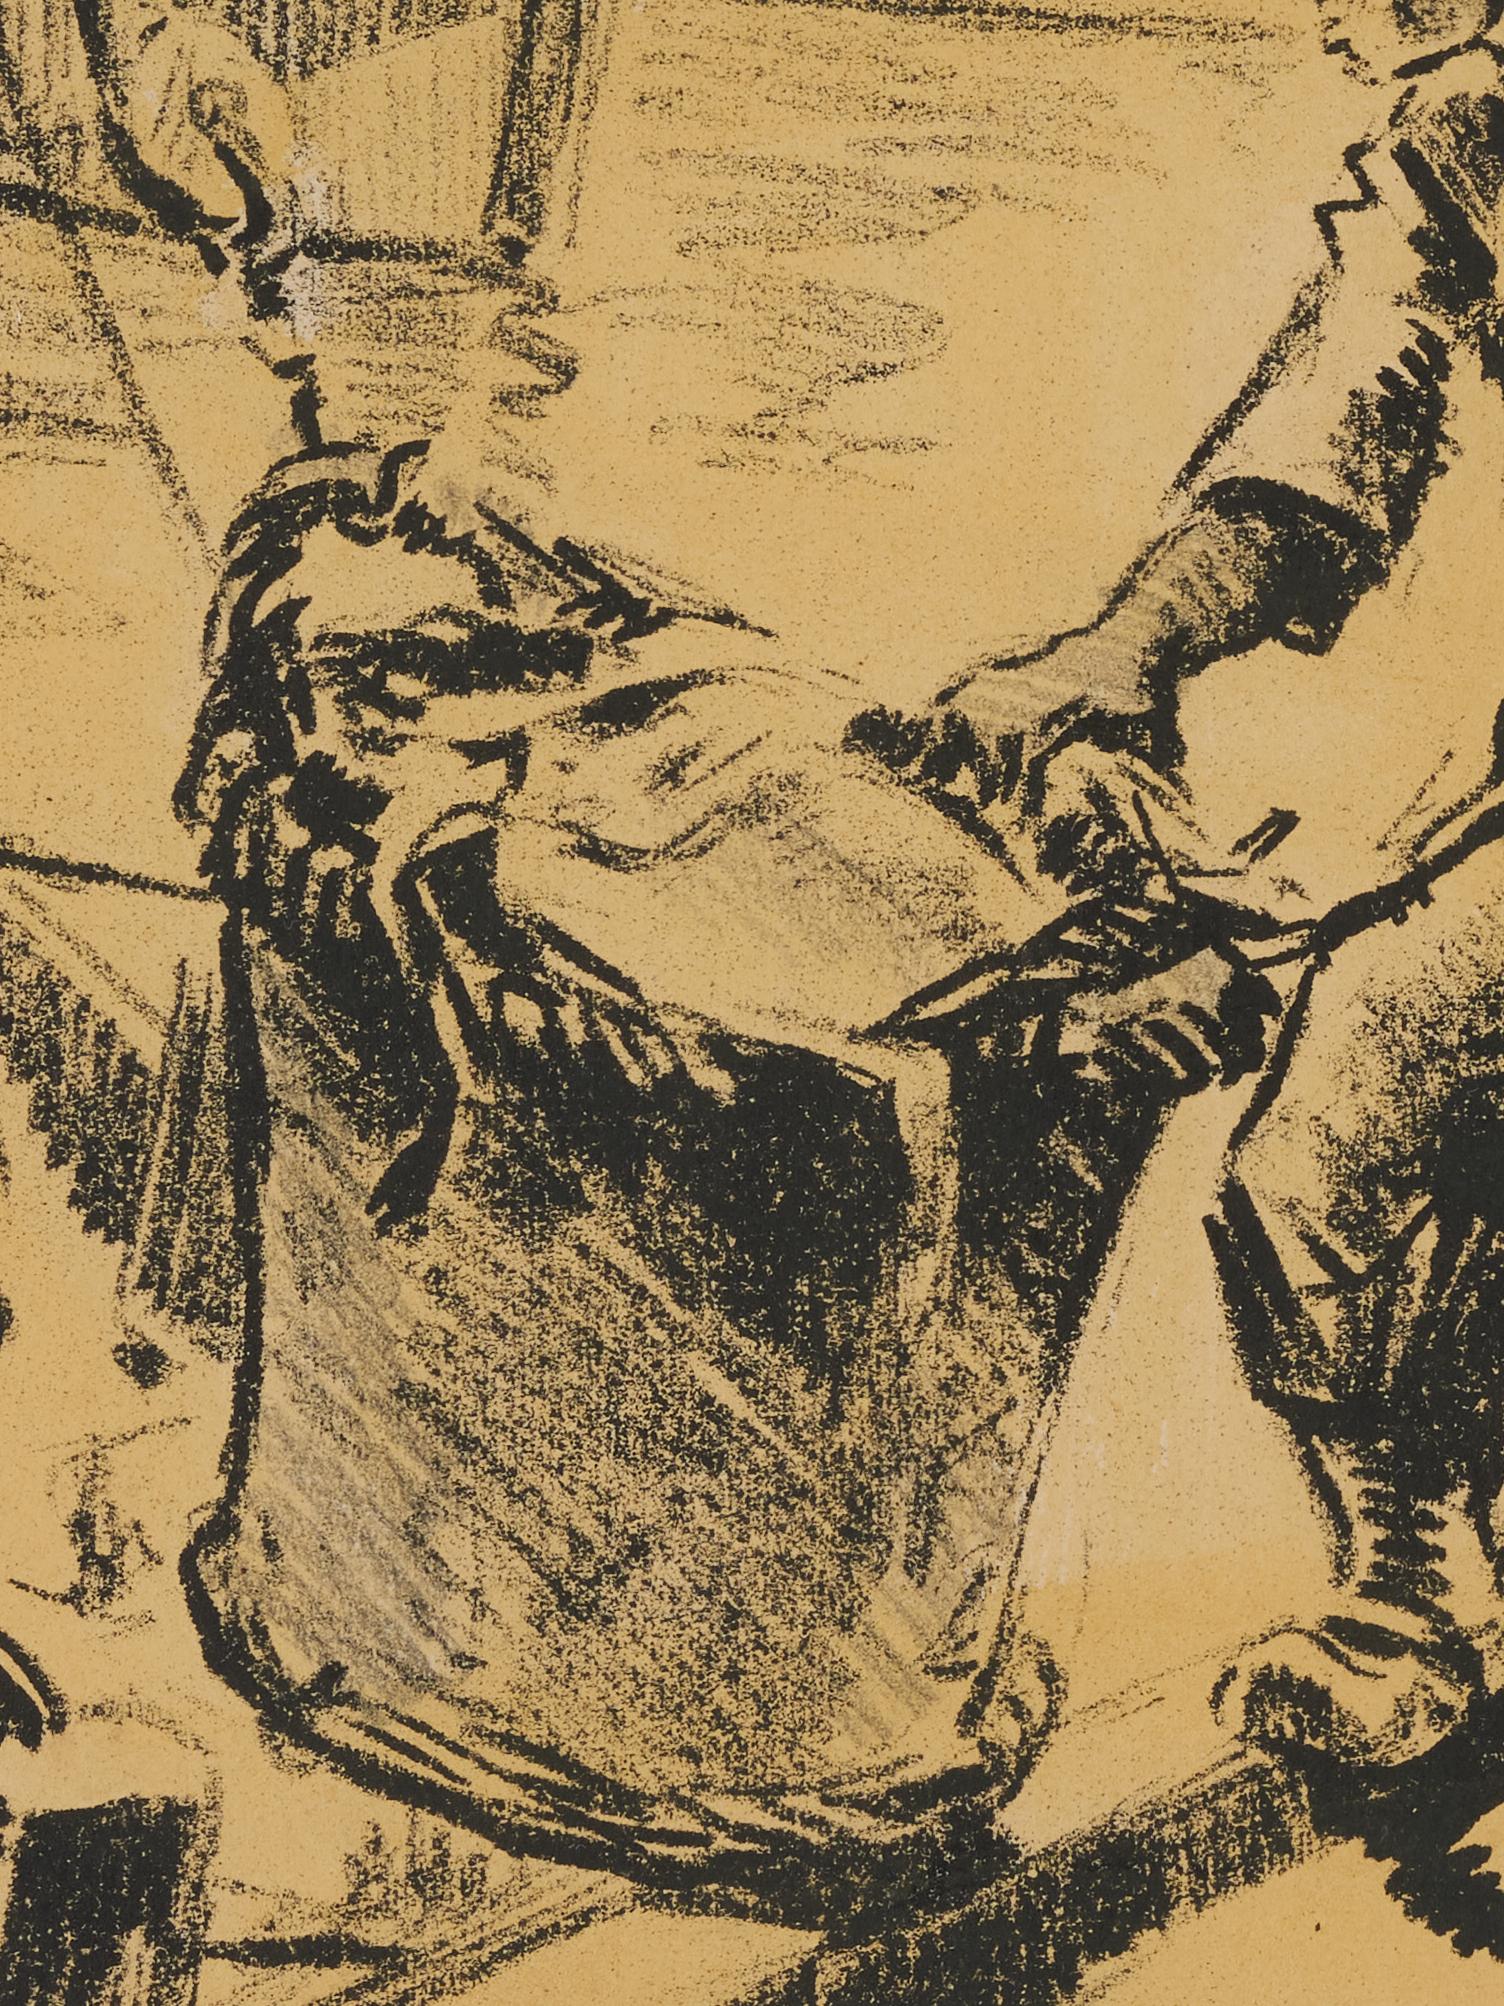 Paper Lucien Desmaré, Fishermen in the Harbor, Framed and Signed